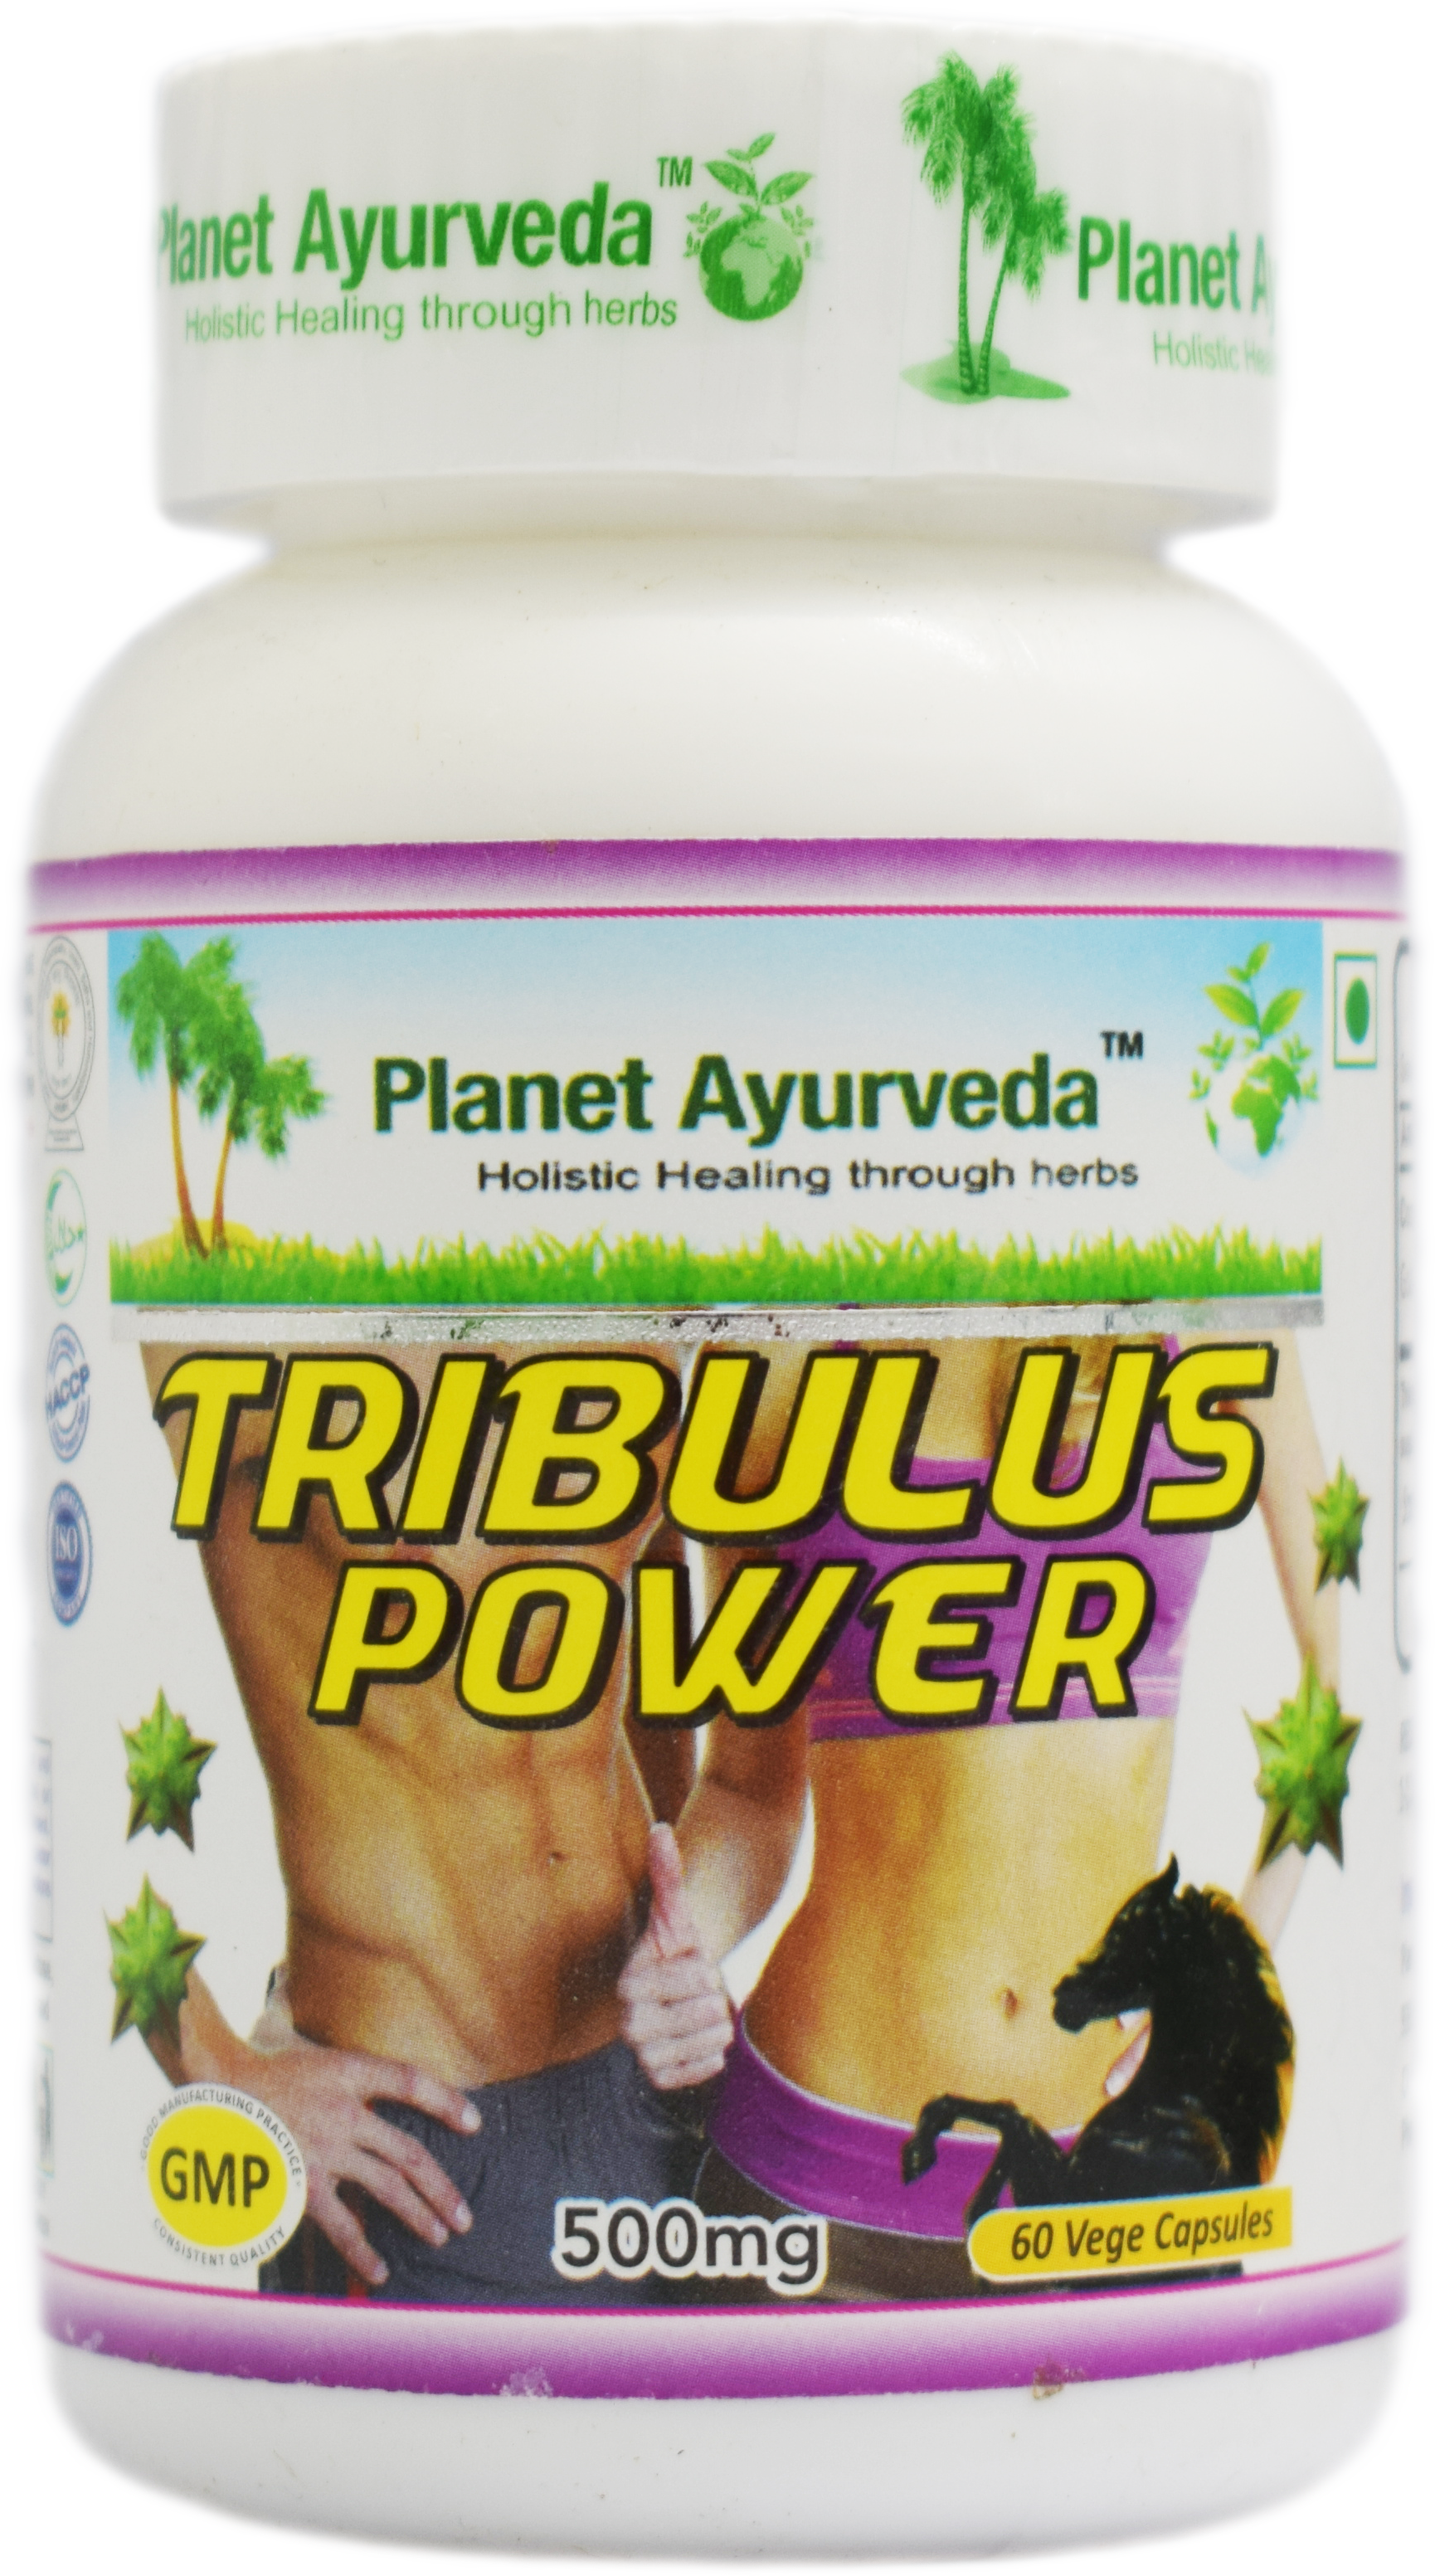 Buy Planet Ayurveda Tribulus Power Capsules at Best Price Online